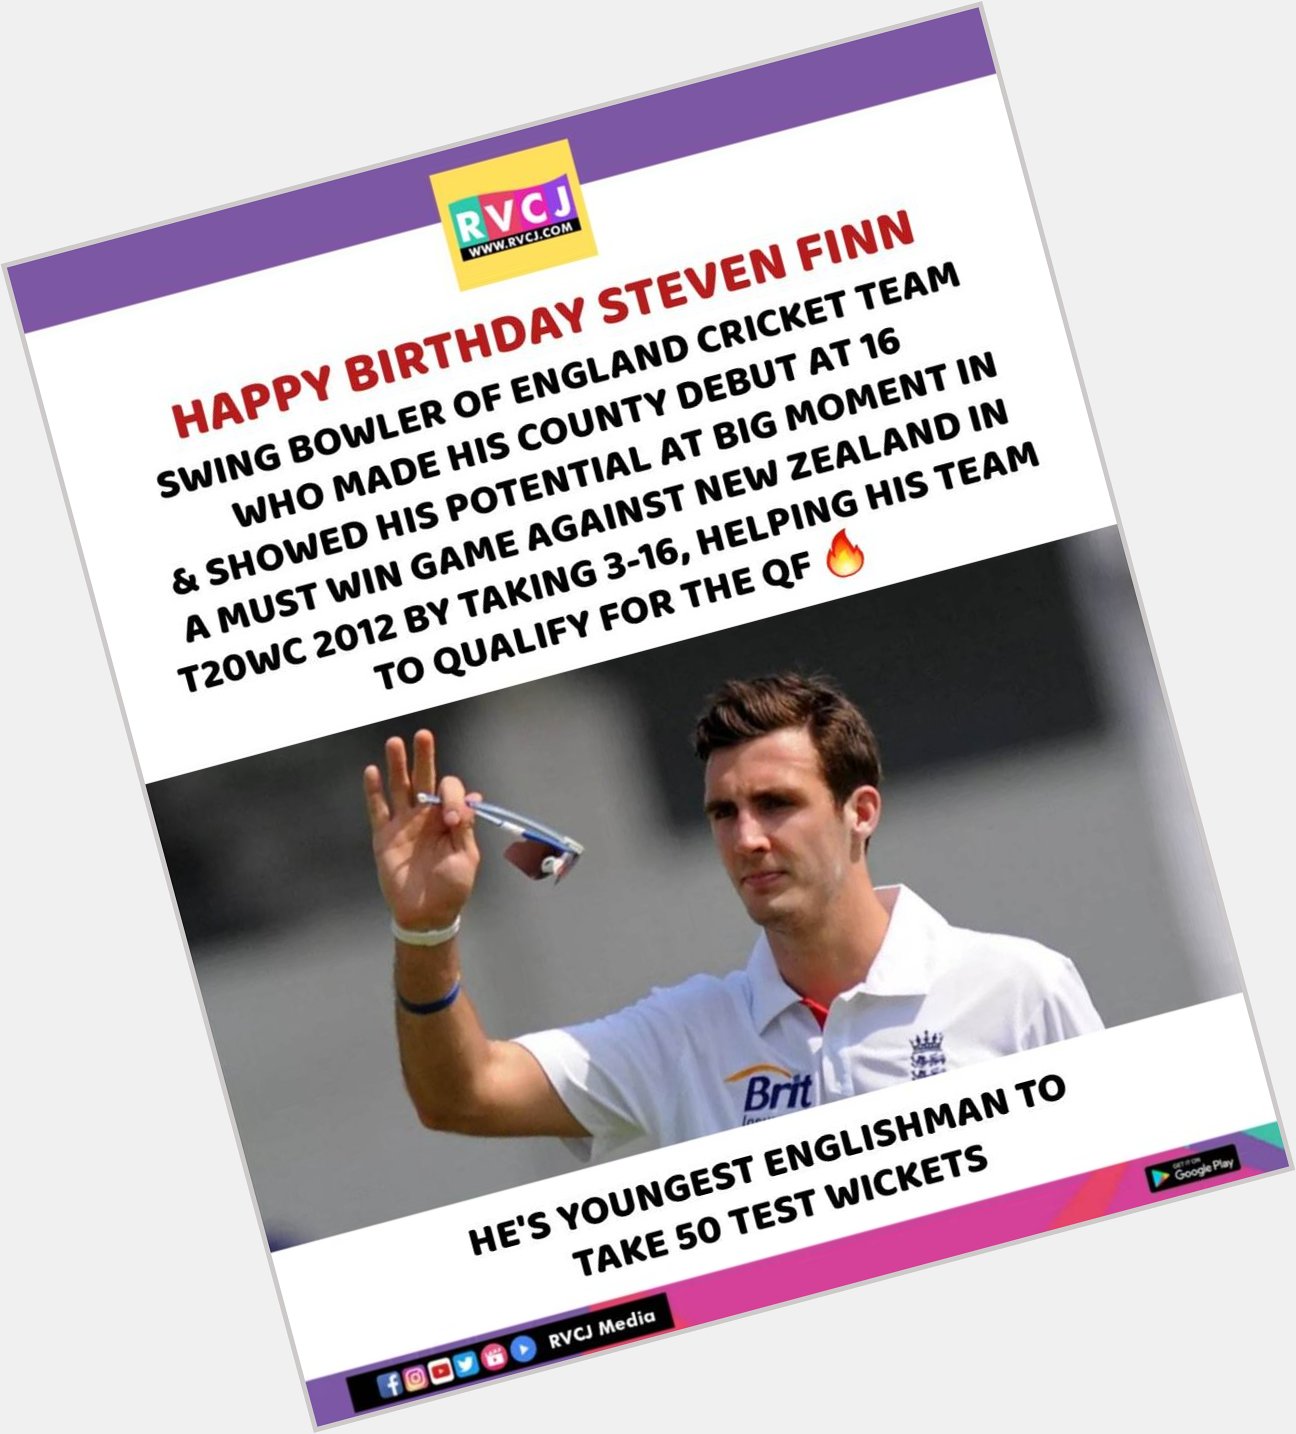 Happy Birthday Steven Finn!  